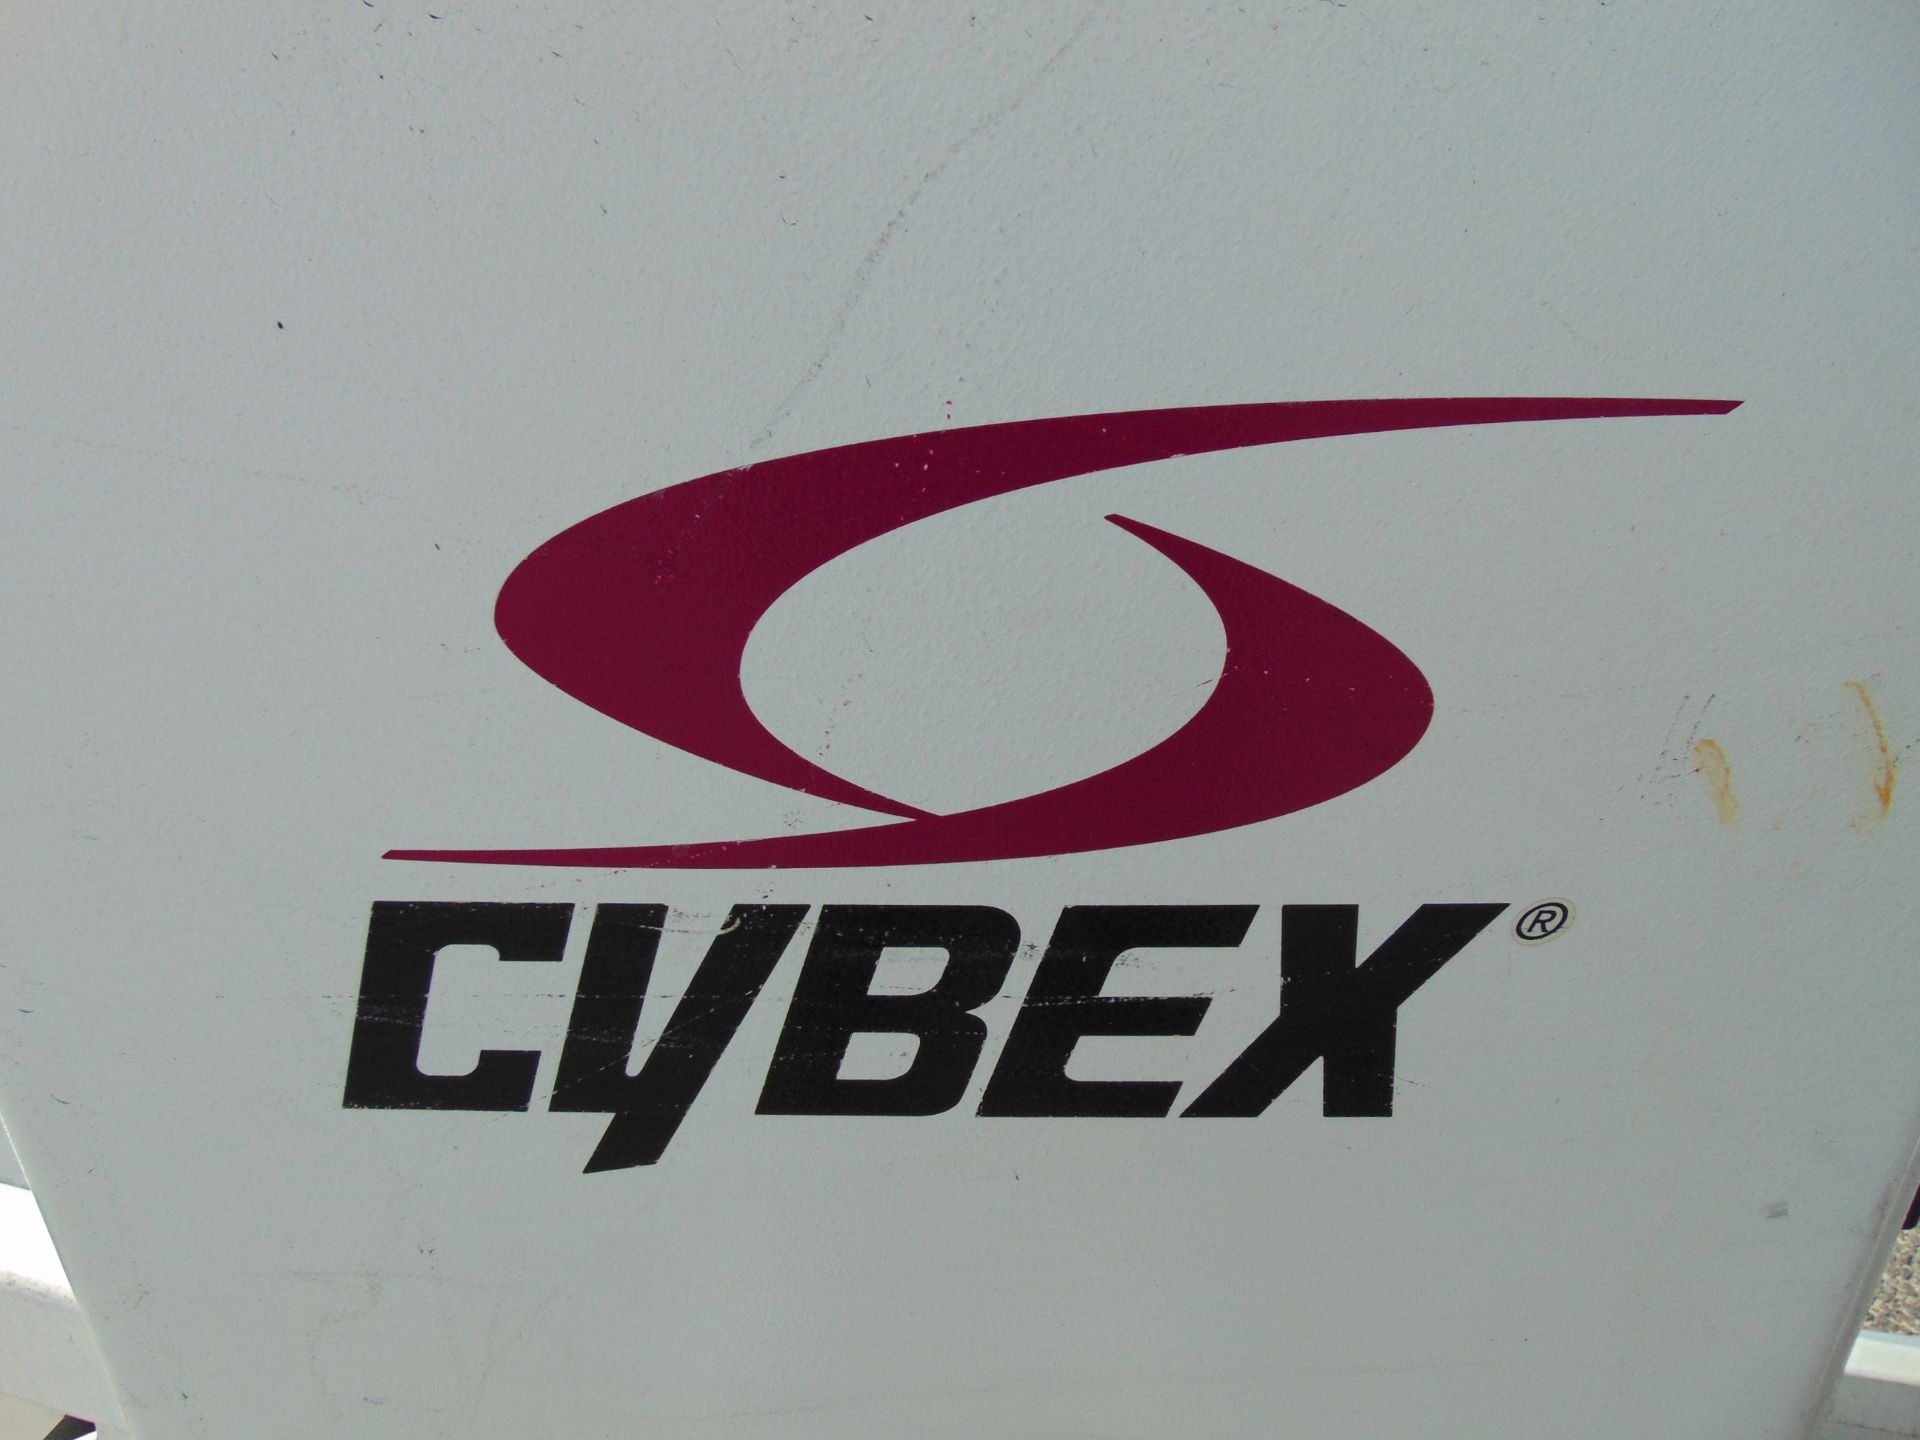 Cybex Seated Leg Press Exercise Machine - Image 5 of 10